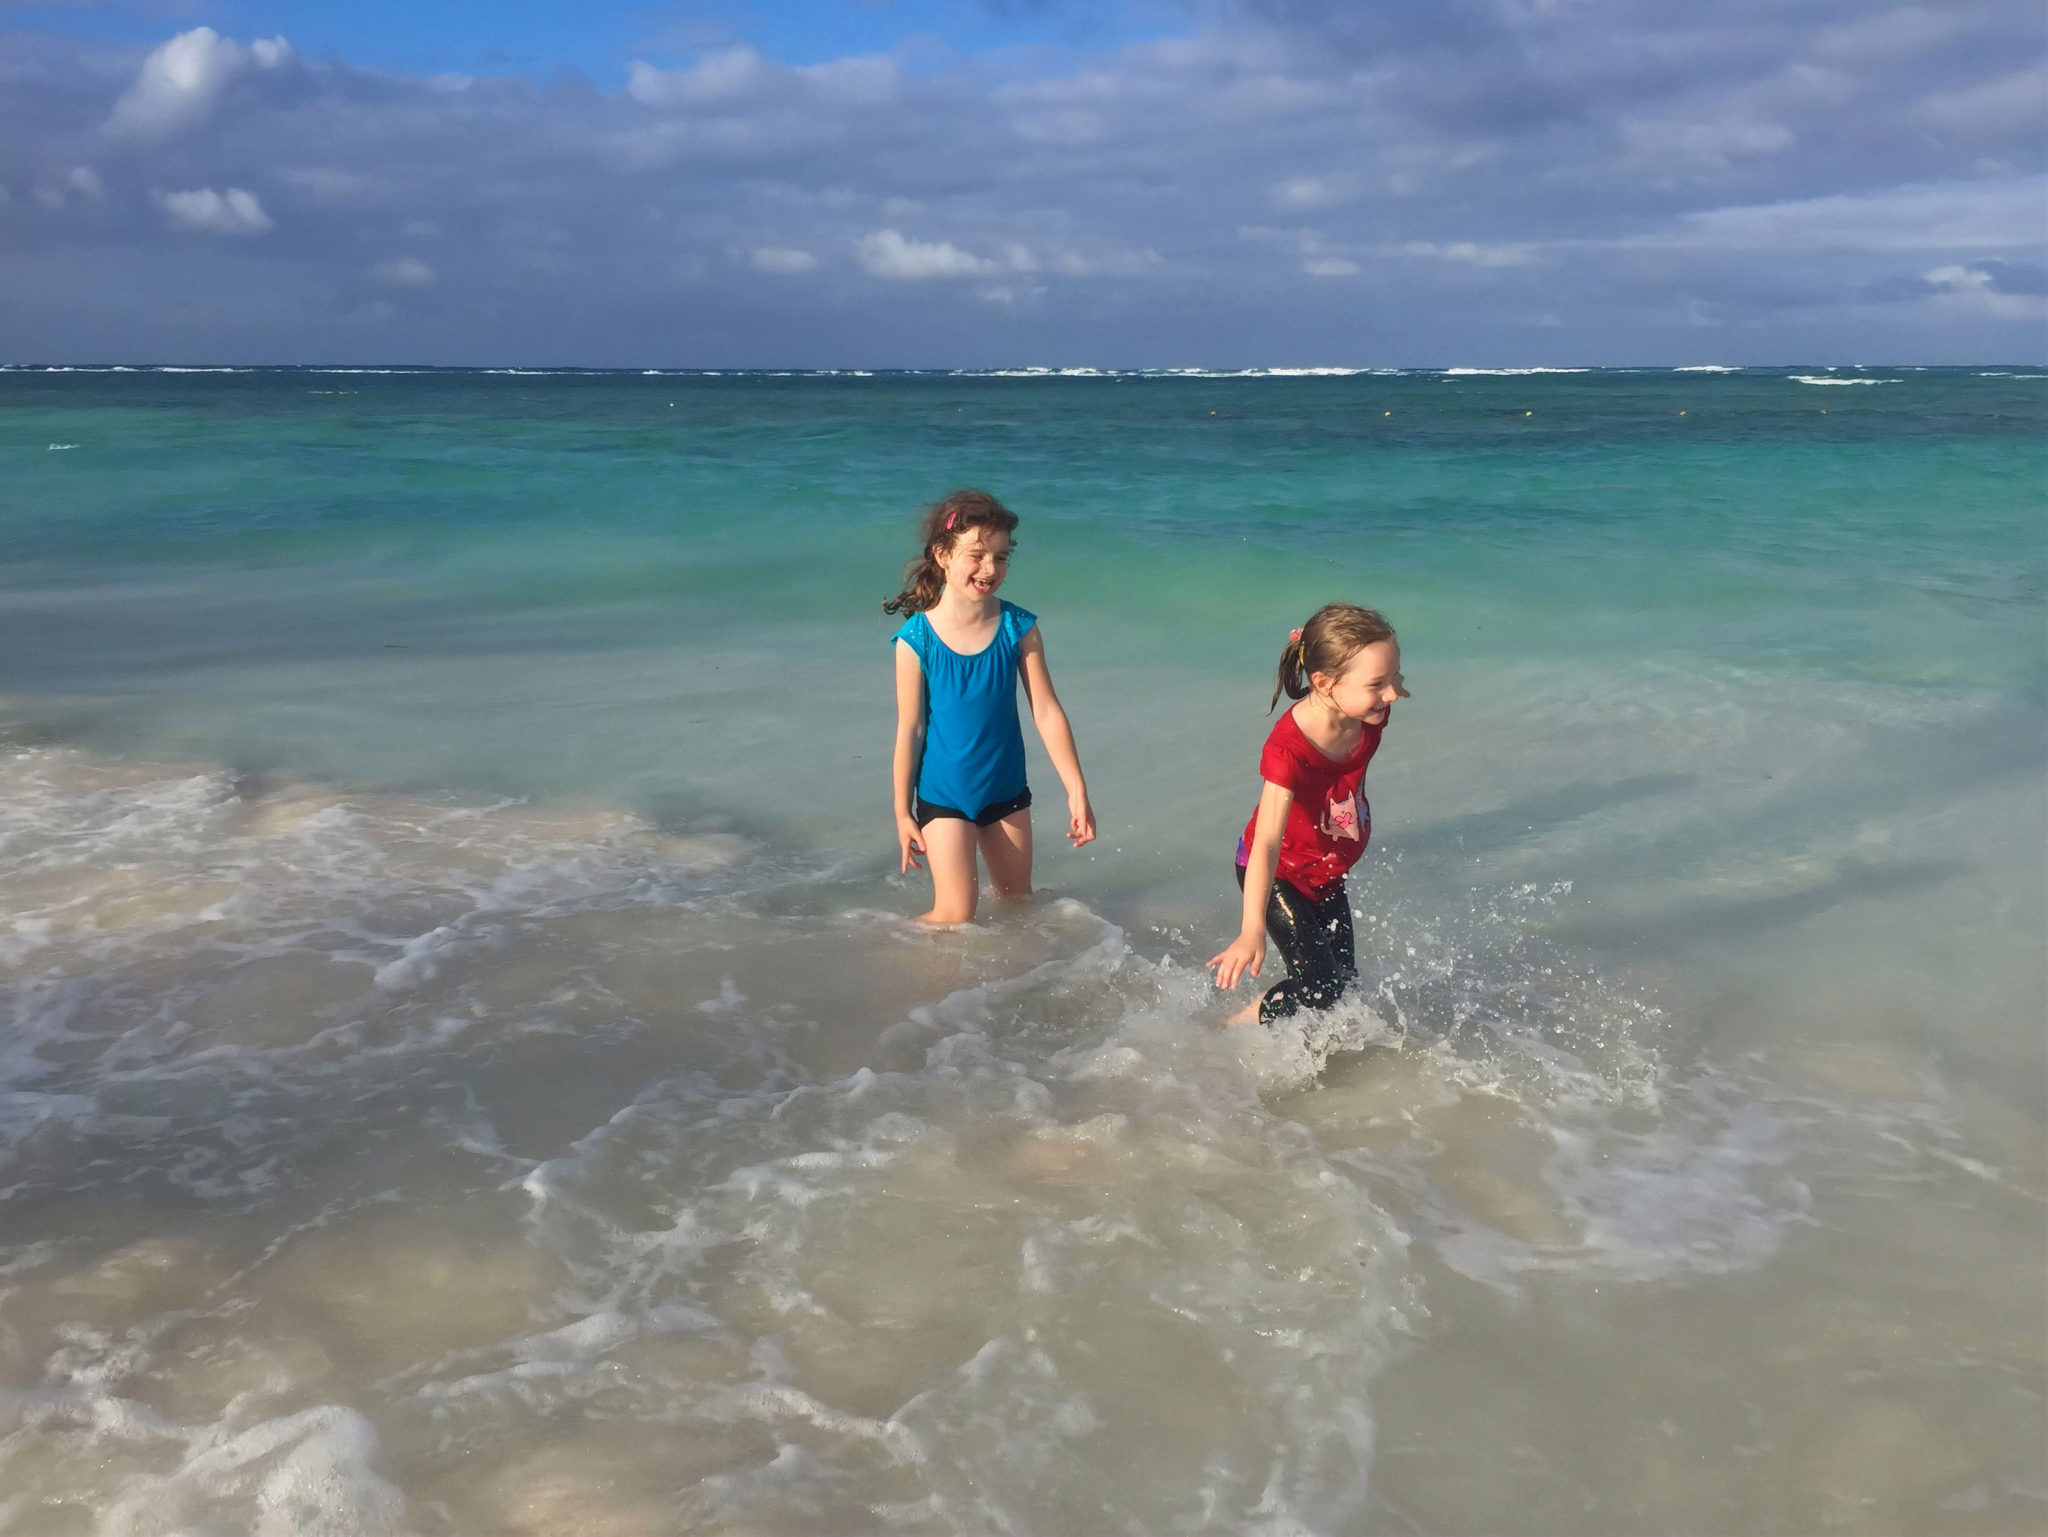 Kids splashing in the Caribbean Sea